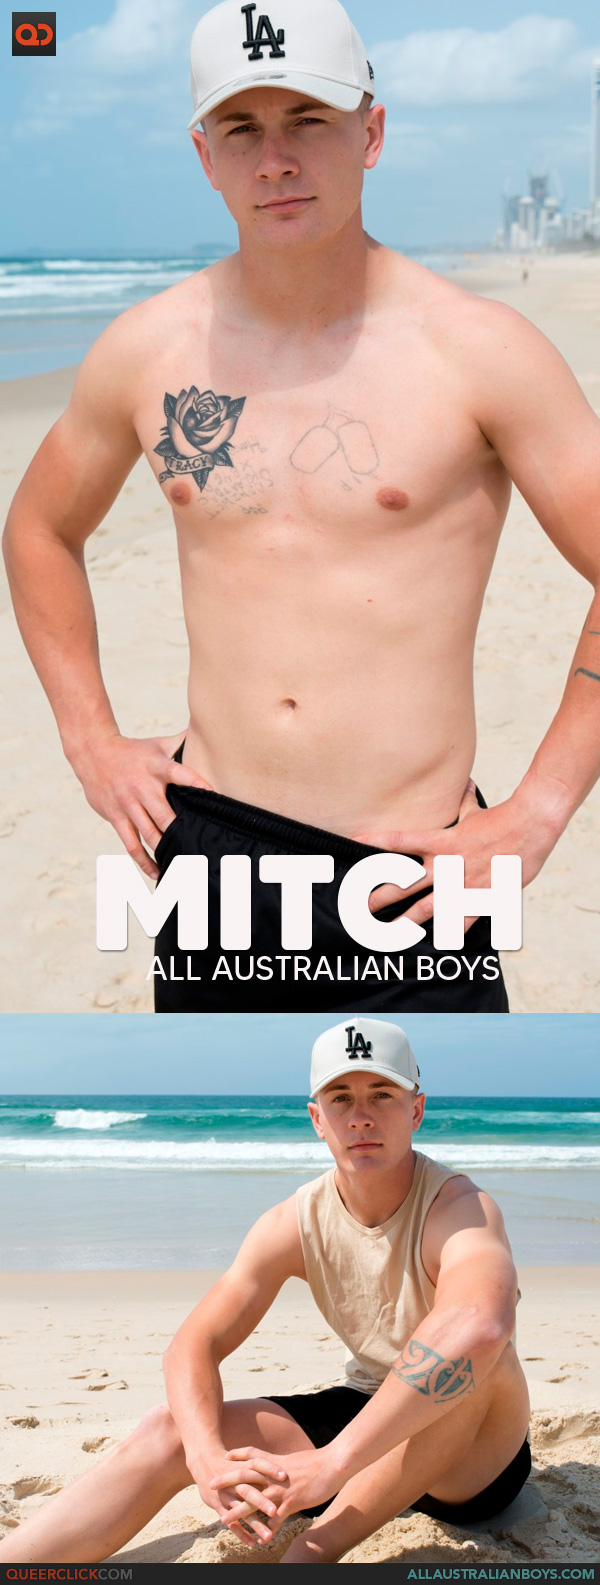 All Australian Boys: Mitch